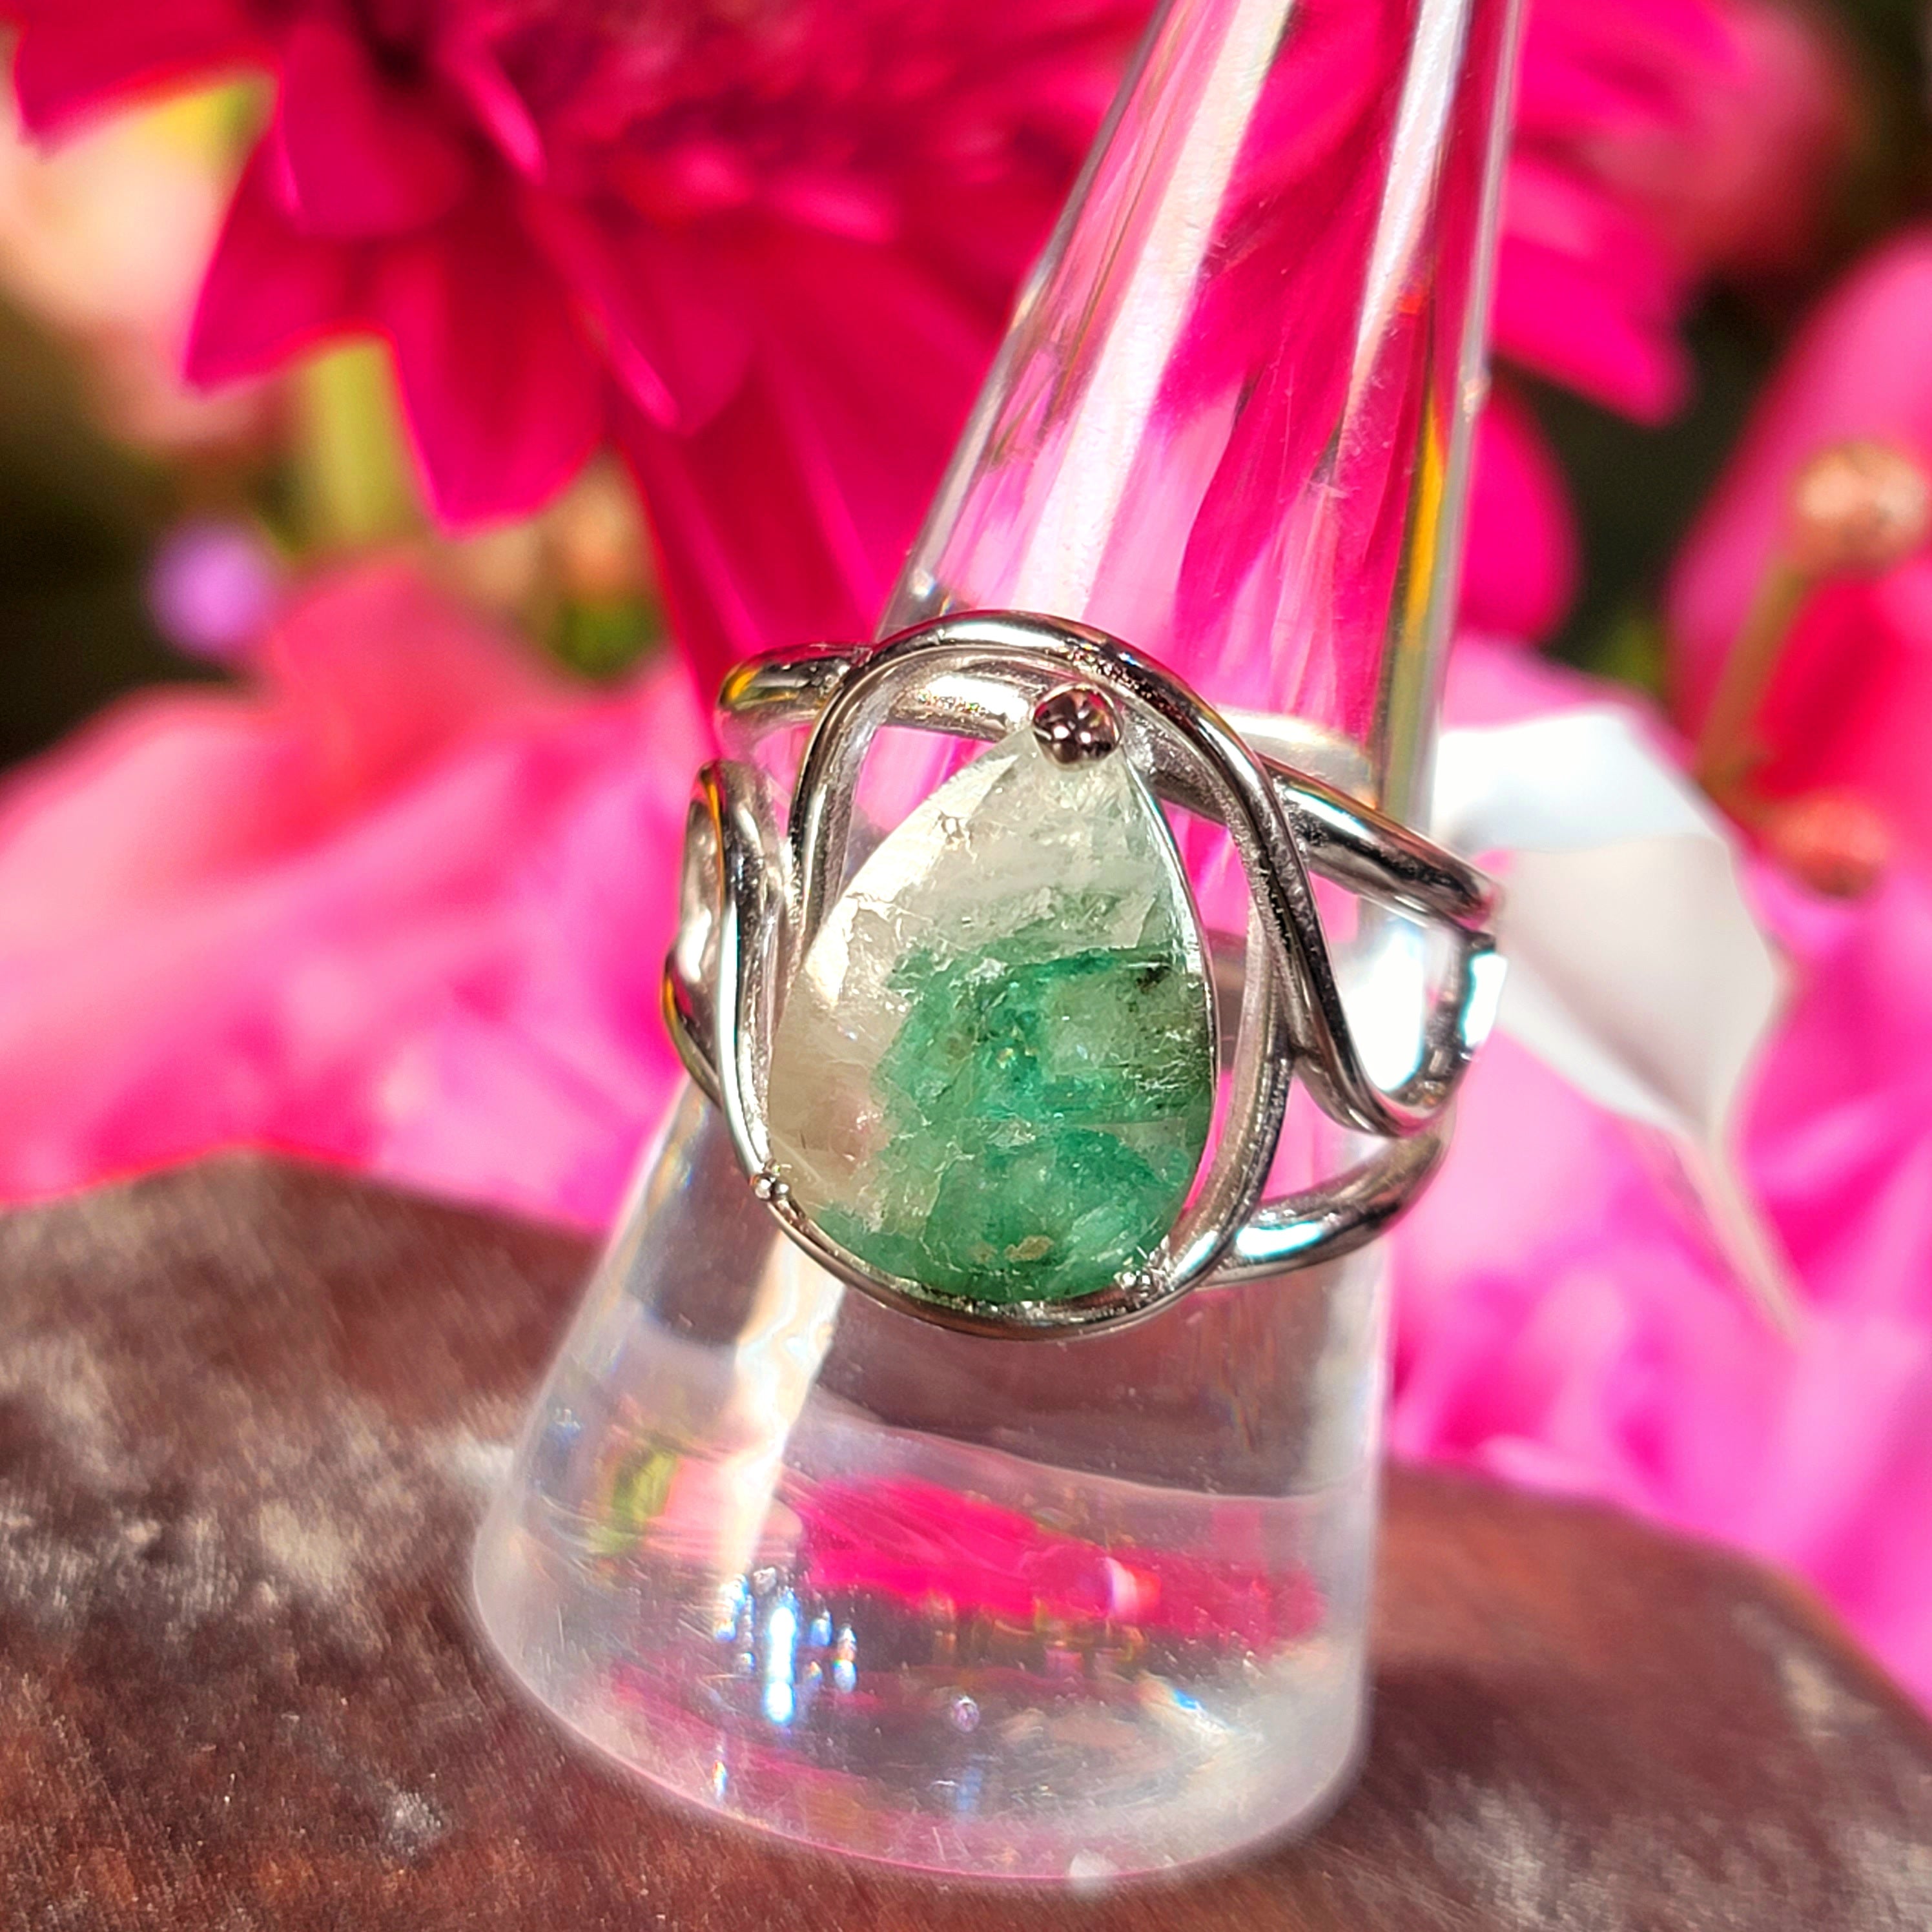 Emerald in Quartz Finger Cuff Adjustable Ring .925 Silver for Abundance, Love and Wealth